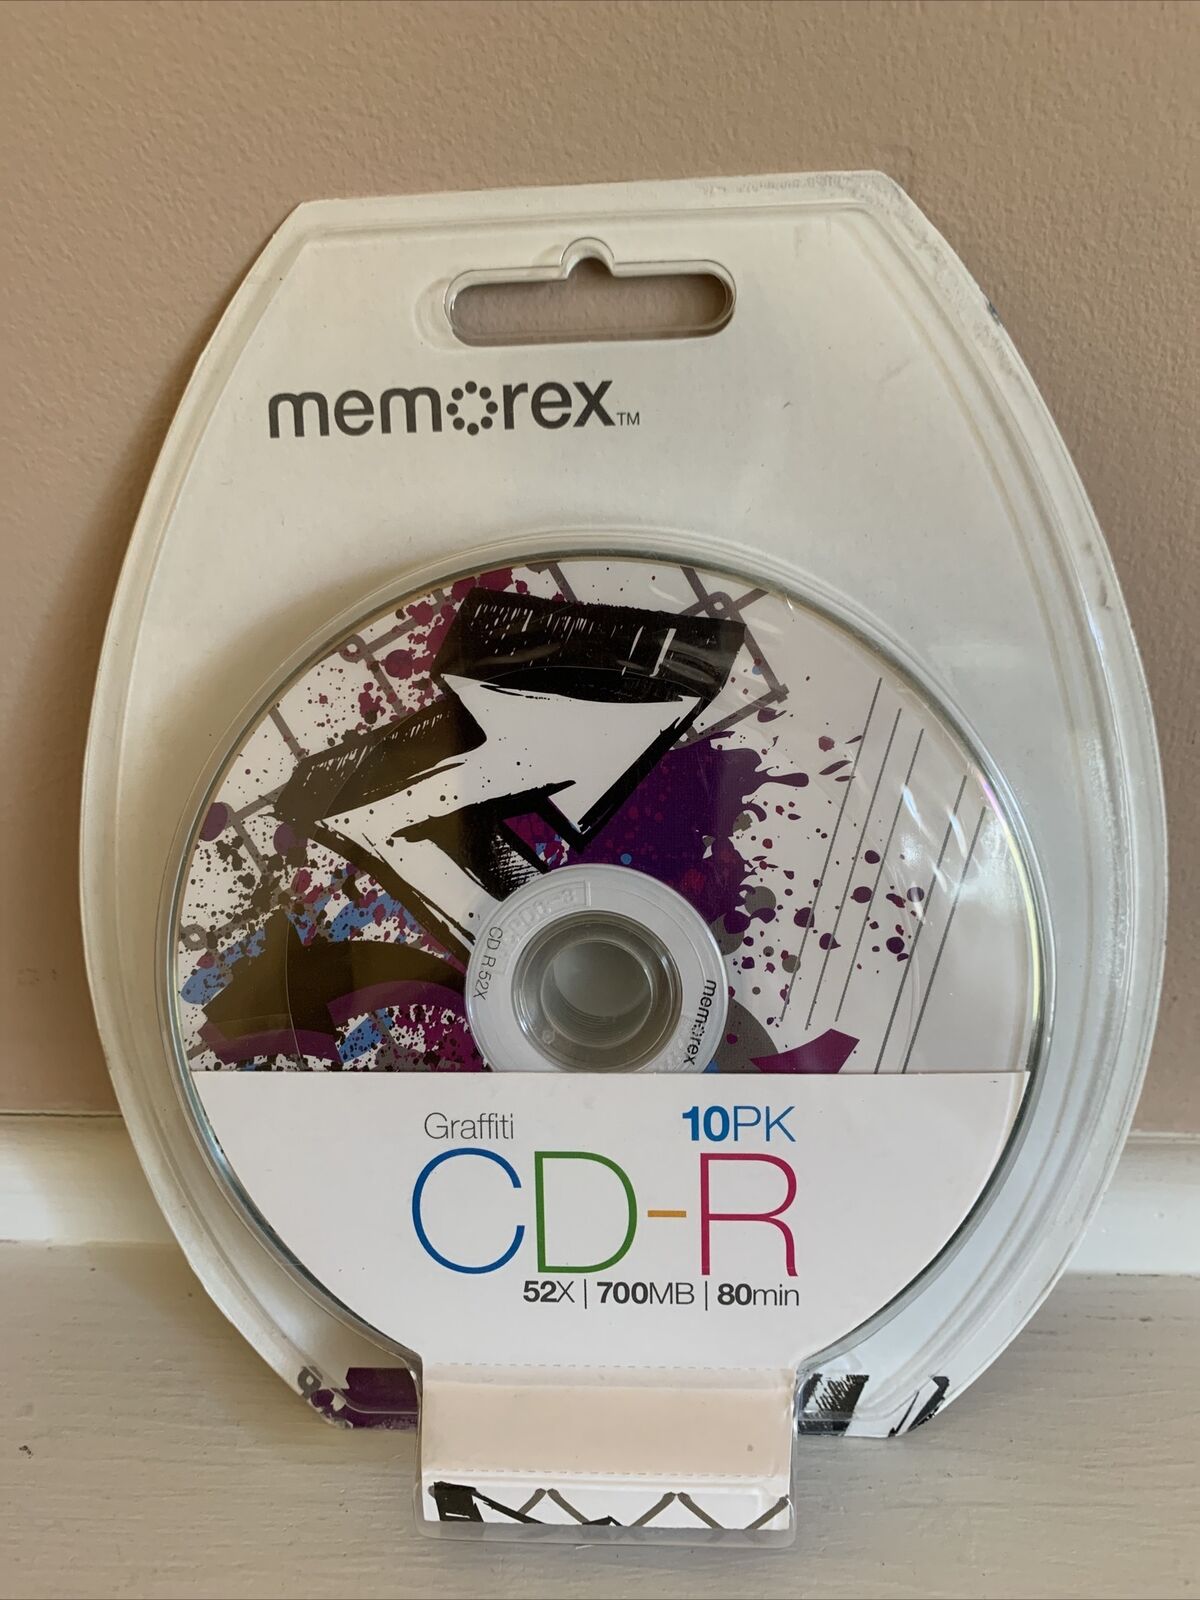 Memorex 10pk Graffiti CD-R 52X 700MB 80 minutes